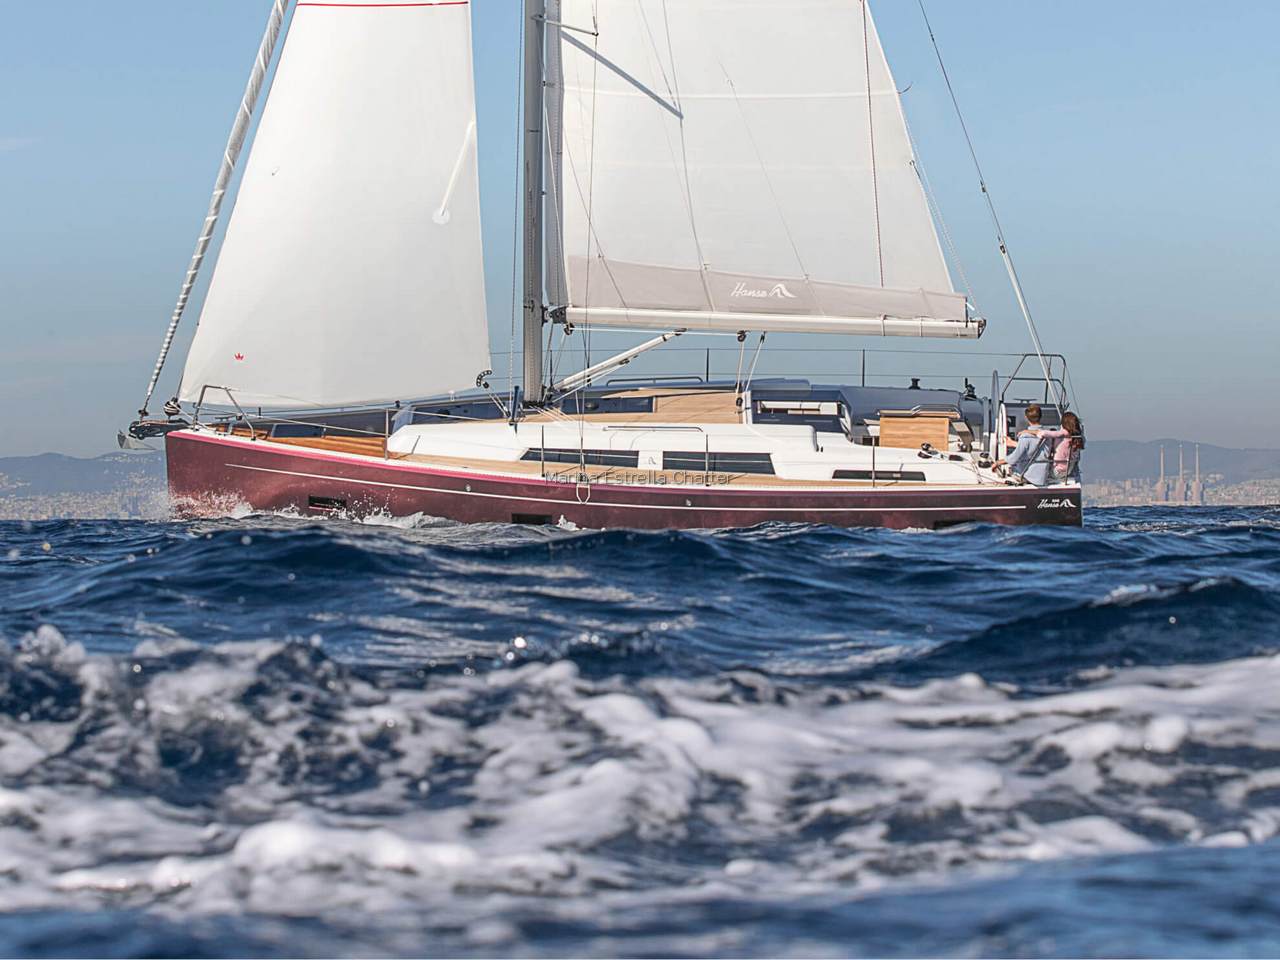 Sail boat FOR CHARTER, year 2022 brand Hanse and model 388, available in Club Náutico Denia Denia Alicante España